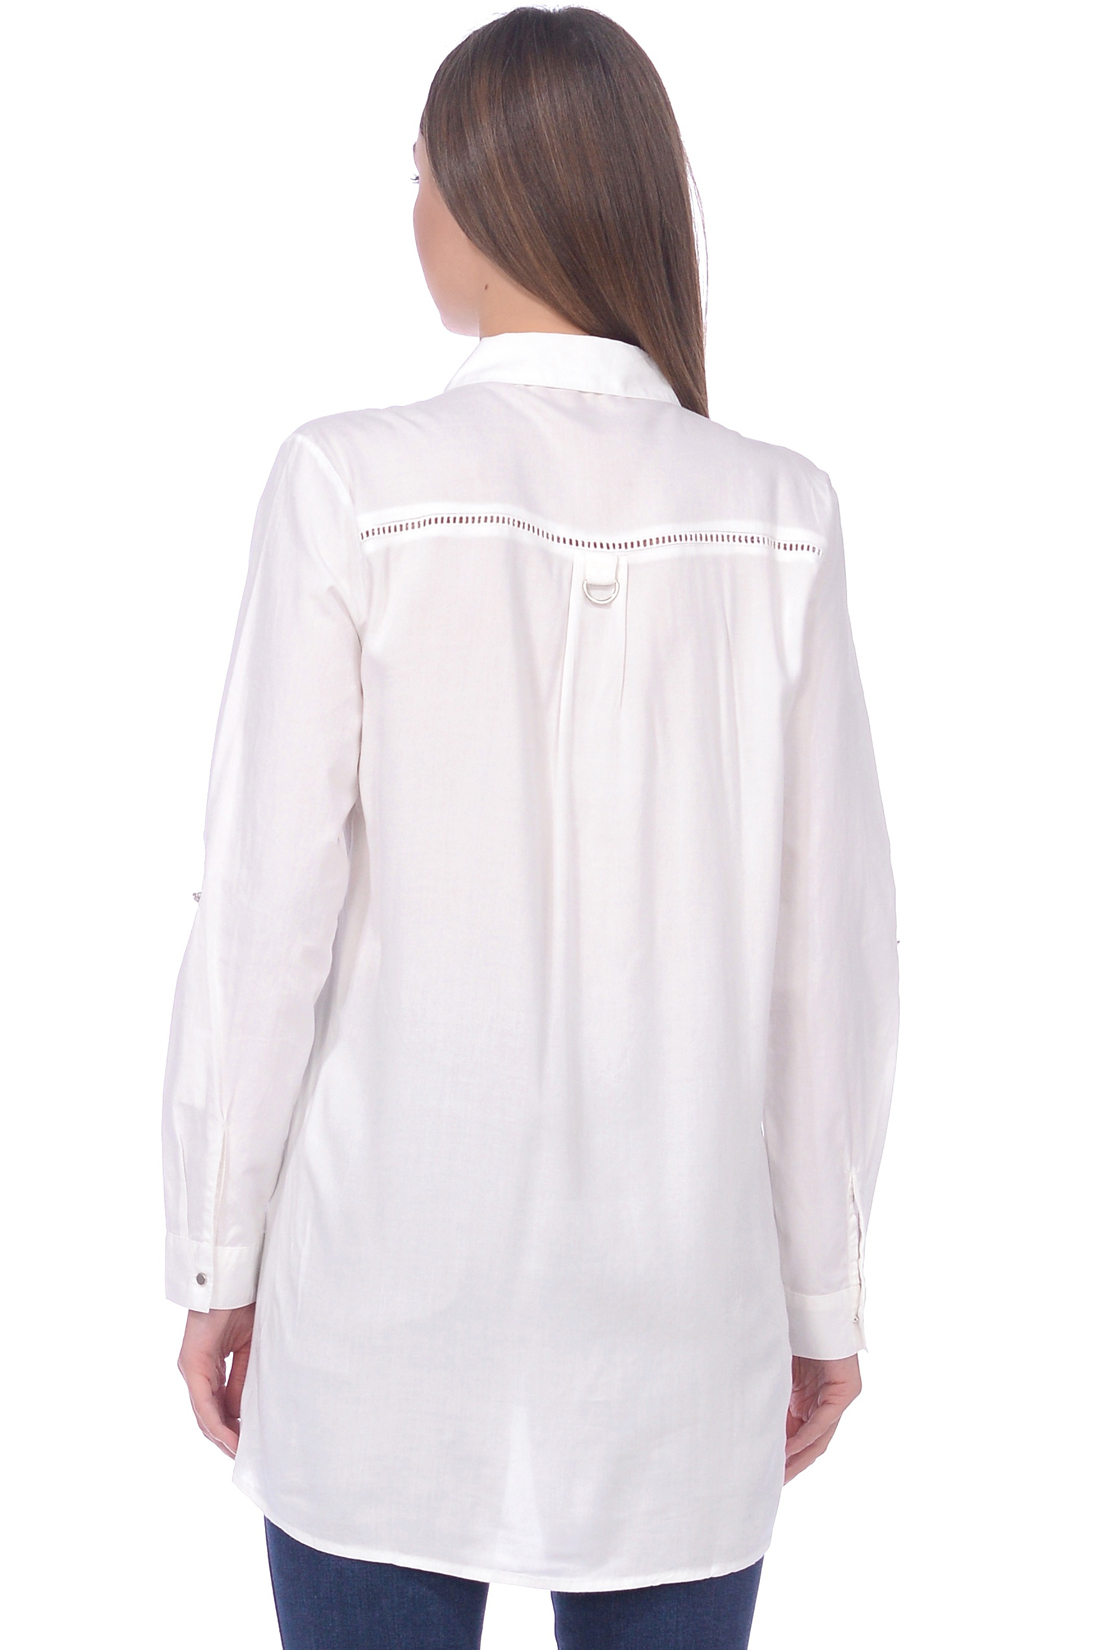 Блузка с ажурными прошвами (арт. baon B179024), размер 3XL, цвет белый Блузка с ажурными прошвами (арт. baon B179024) - фото 2